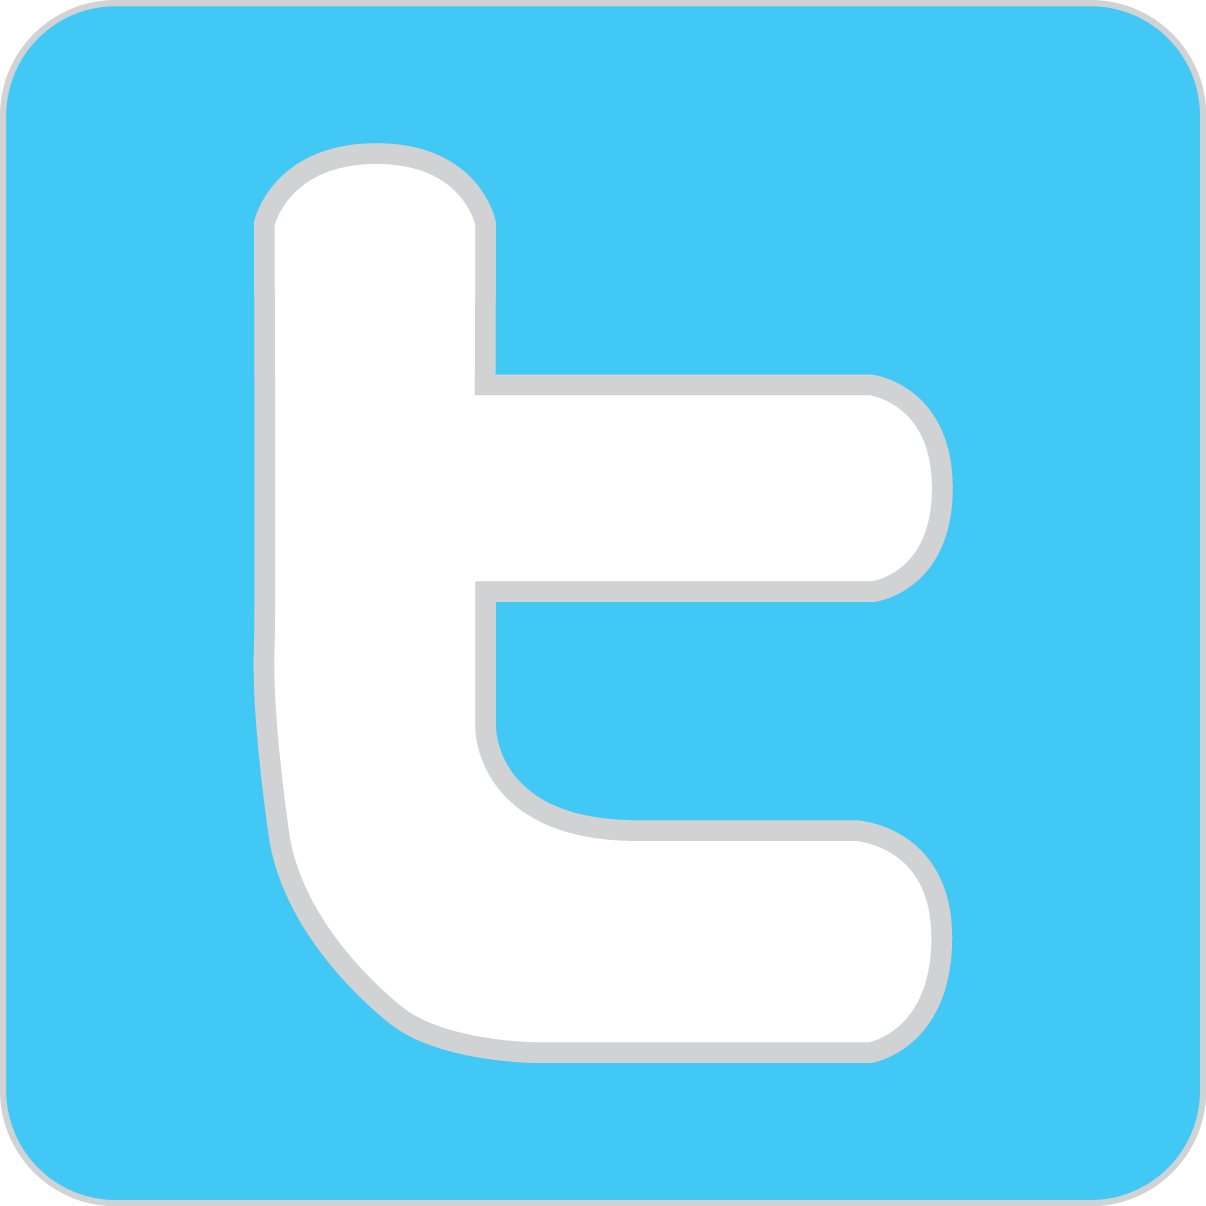 Twitter Icon Vector Logo